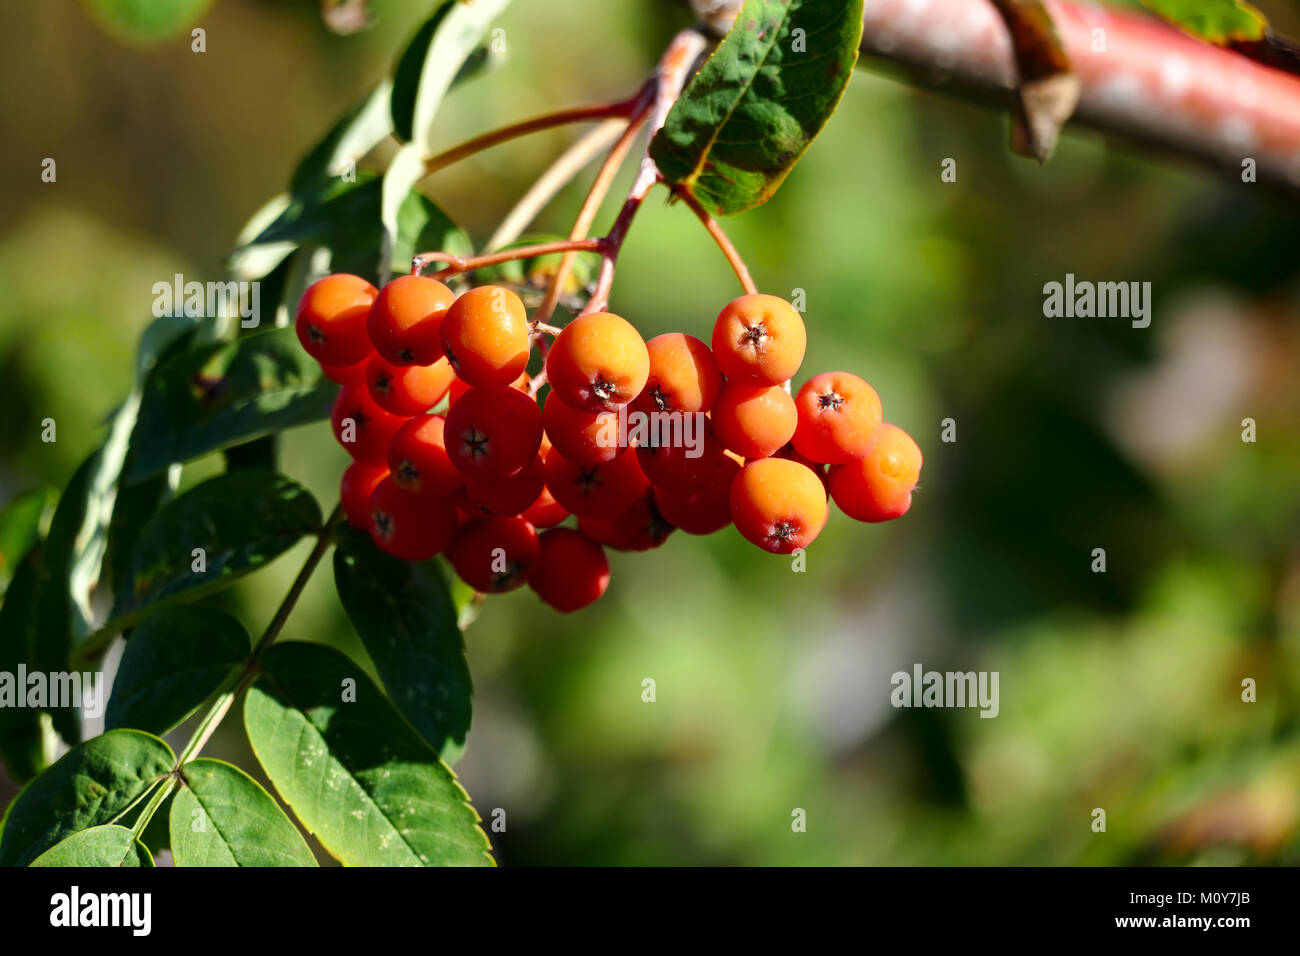 Rowan berries on a blurred background. Stock Photo